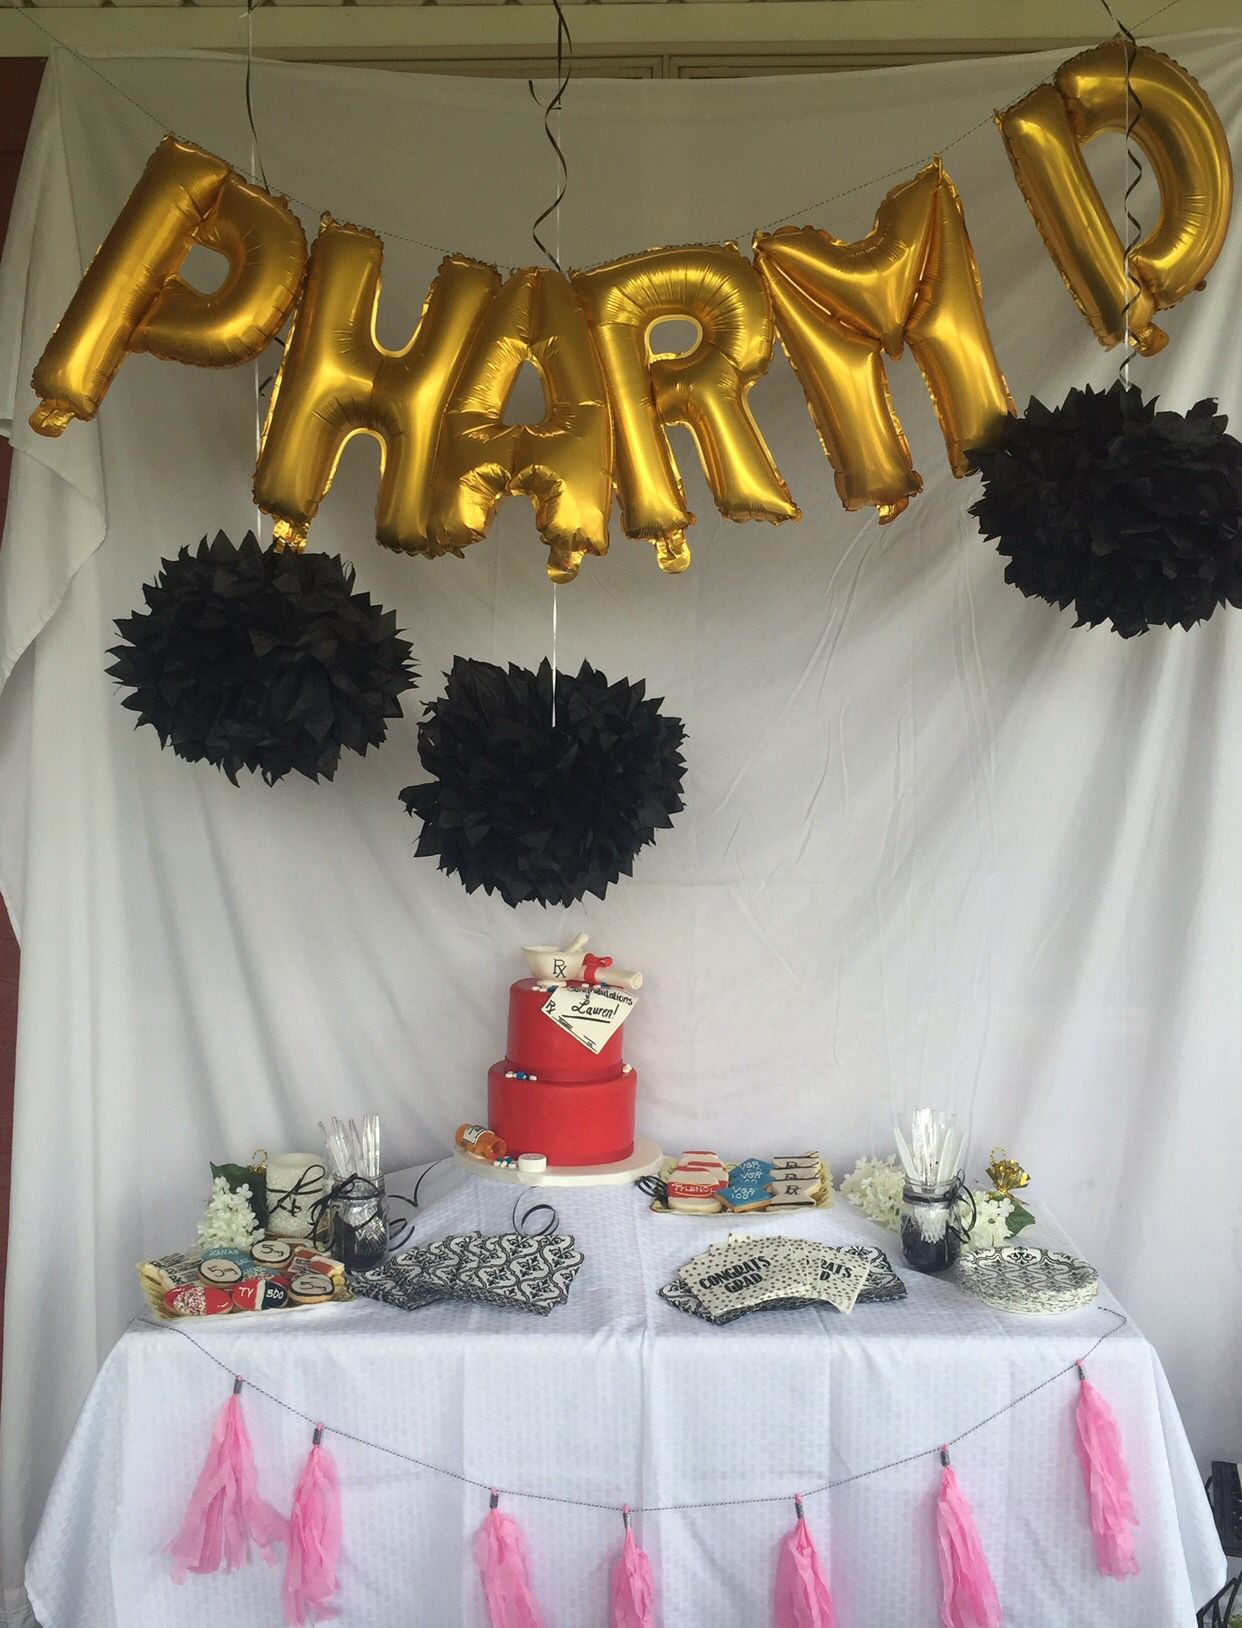 Pharmacy School Graduation Party Ideas
 Pharmacy Graduation Party pharmacy pharmd graduation